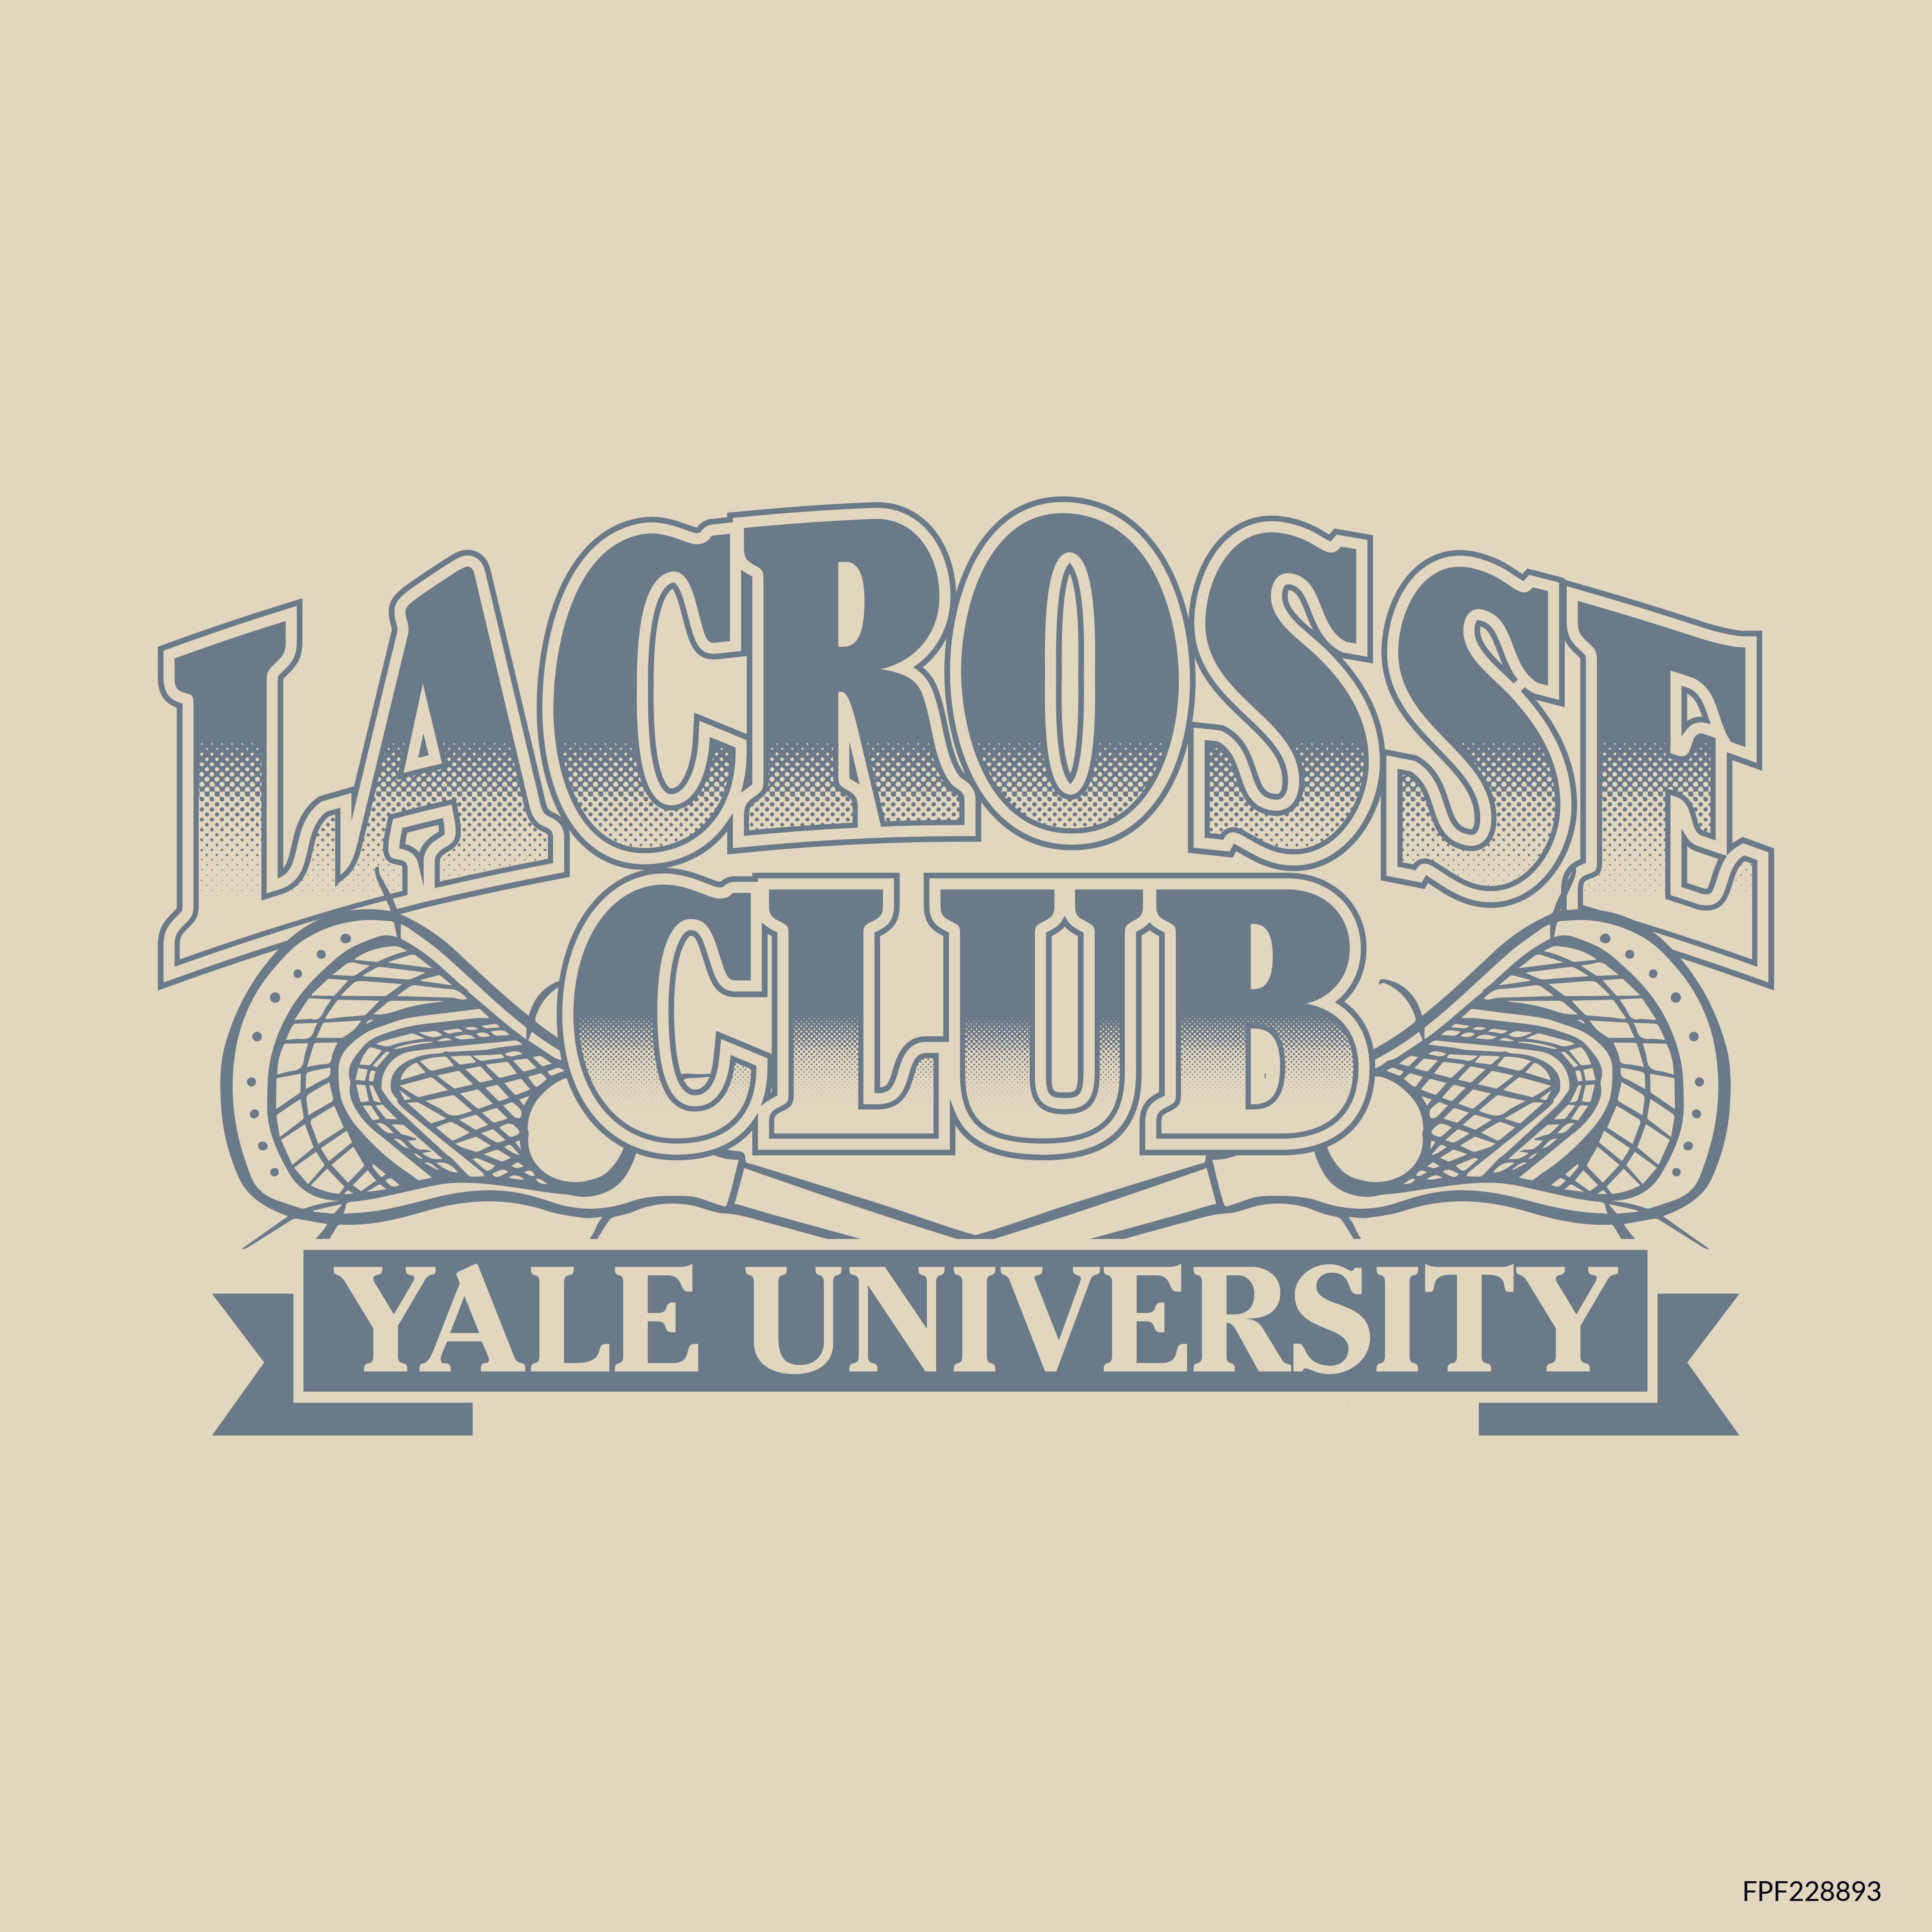 Lacrosse Club